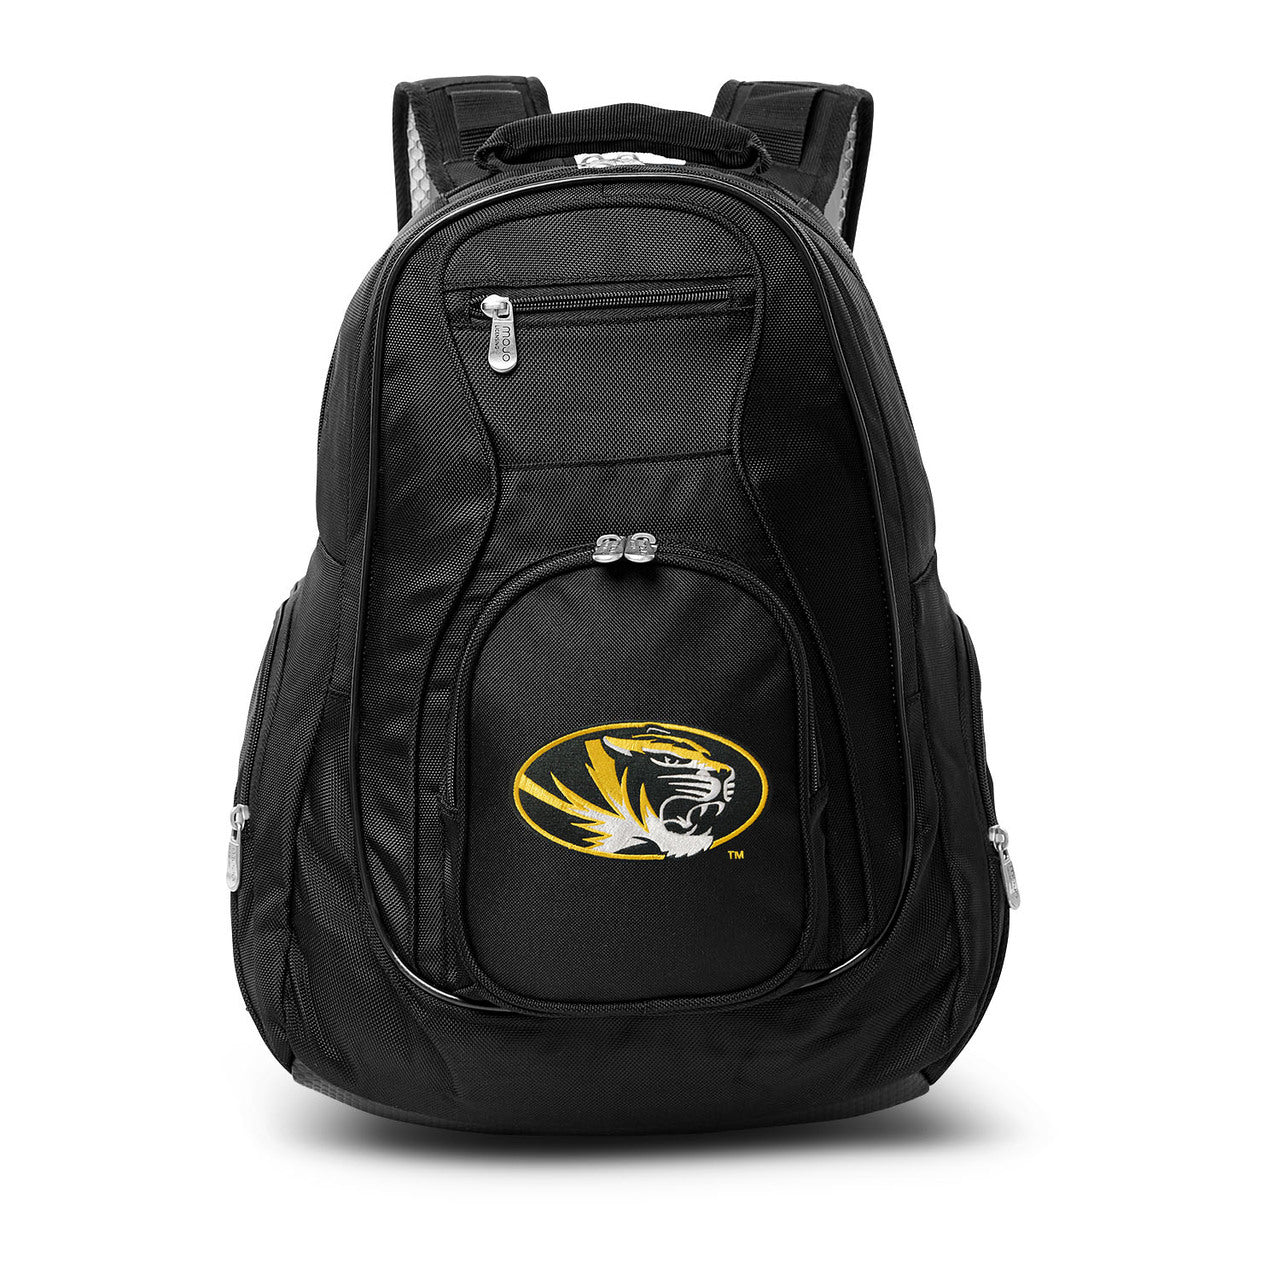 Missouri Tigers Laptop Backpack Black